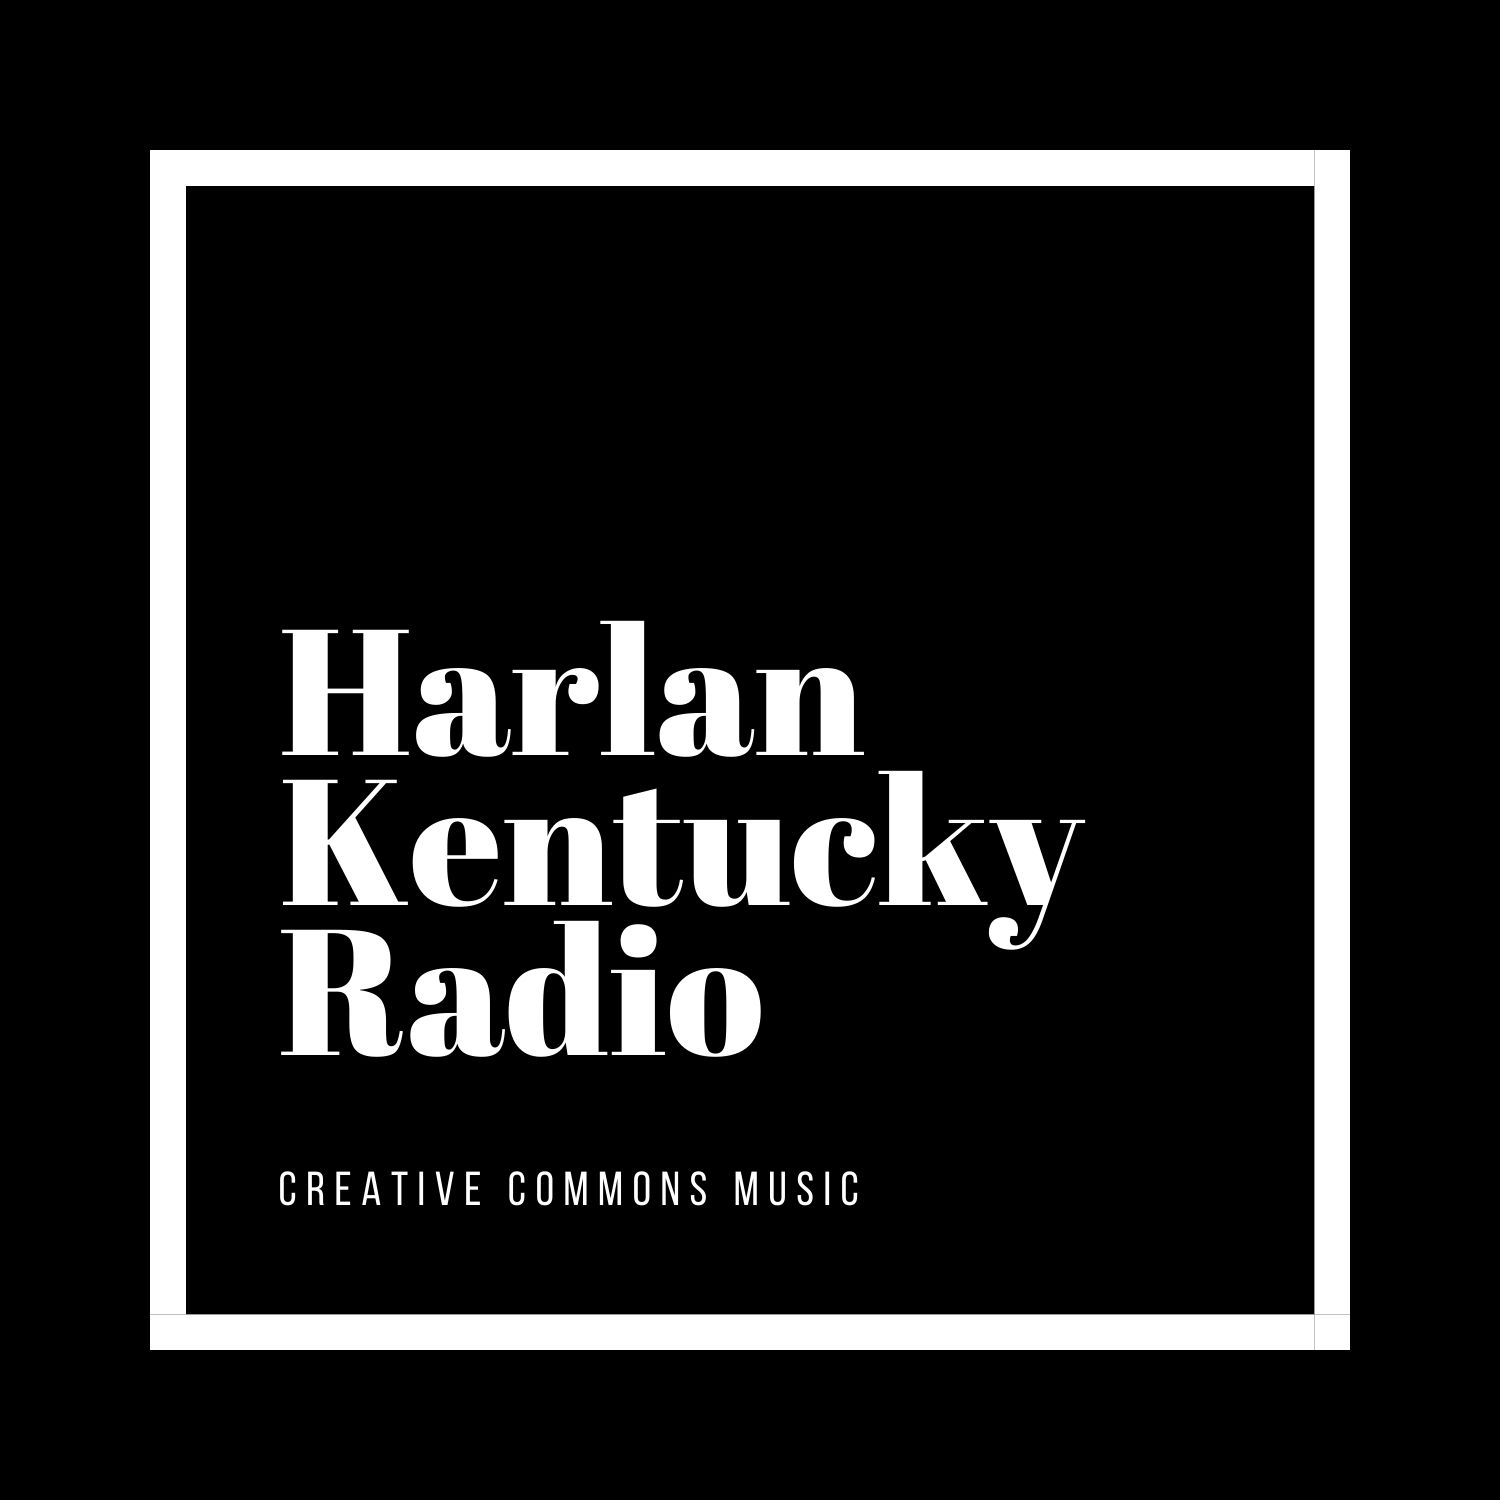 Harlan Kentucky Creative Commons Pop